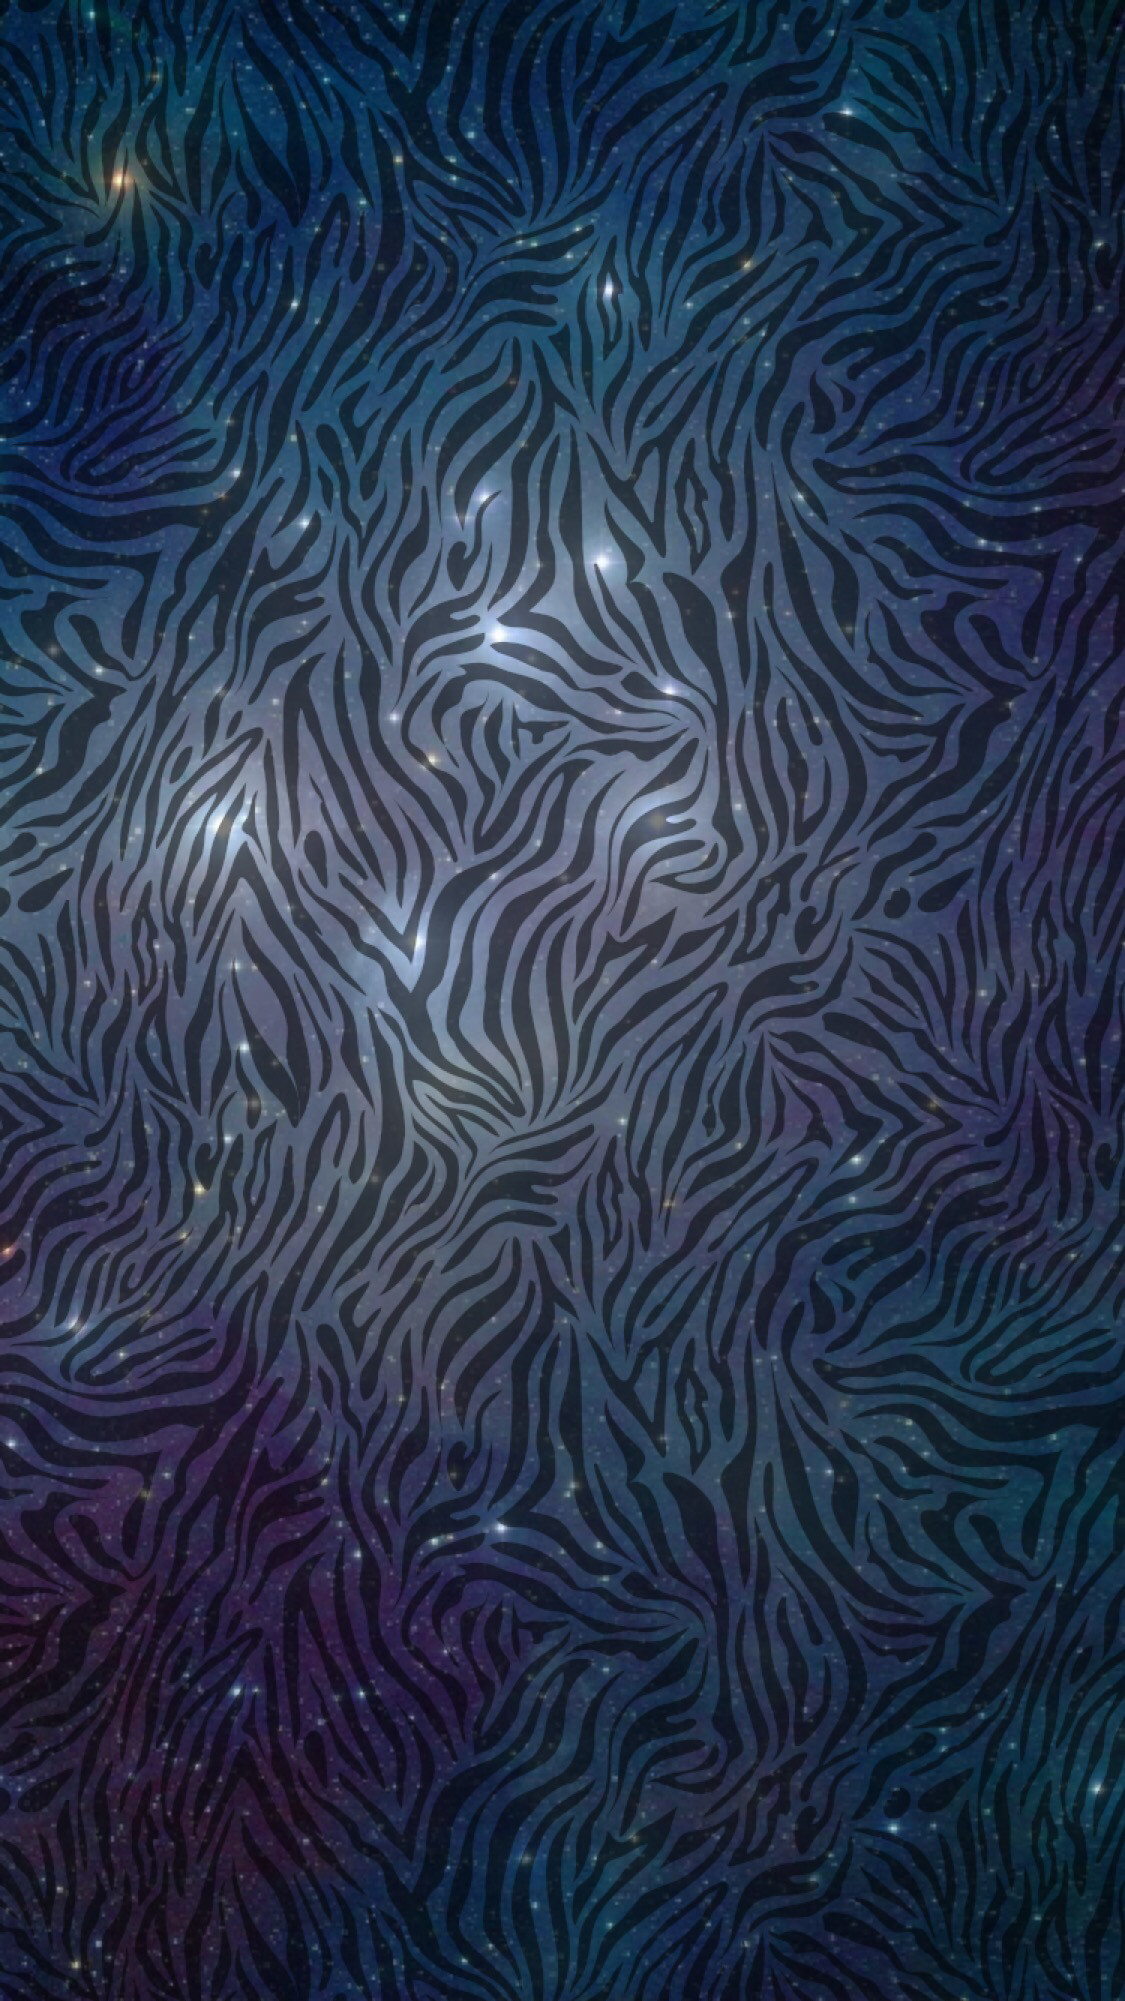 1125x2001 Zebra iPhone wallpaper